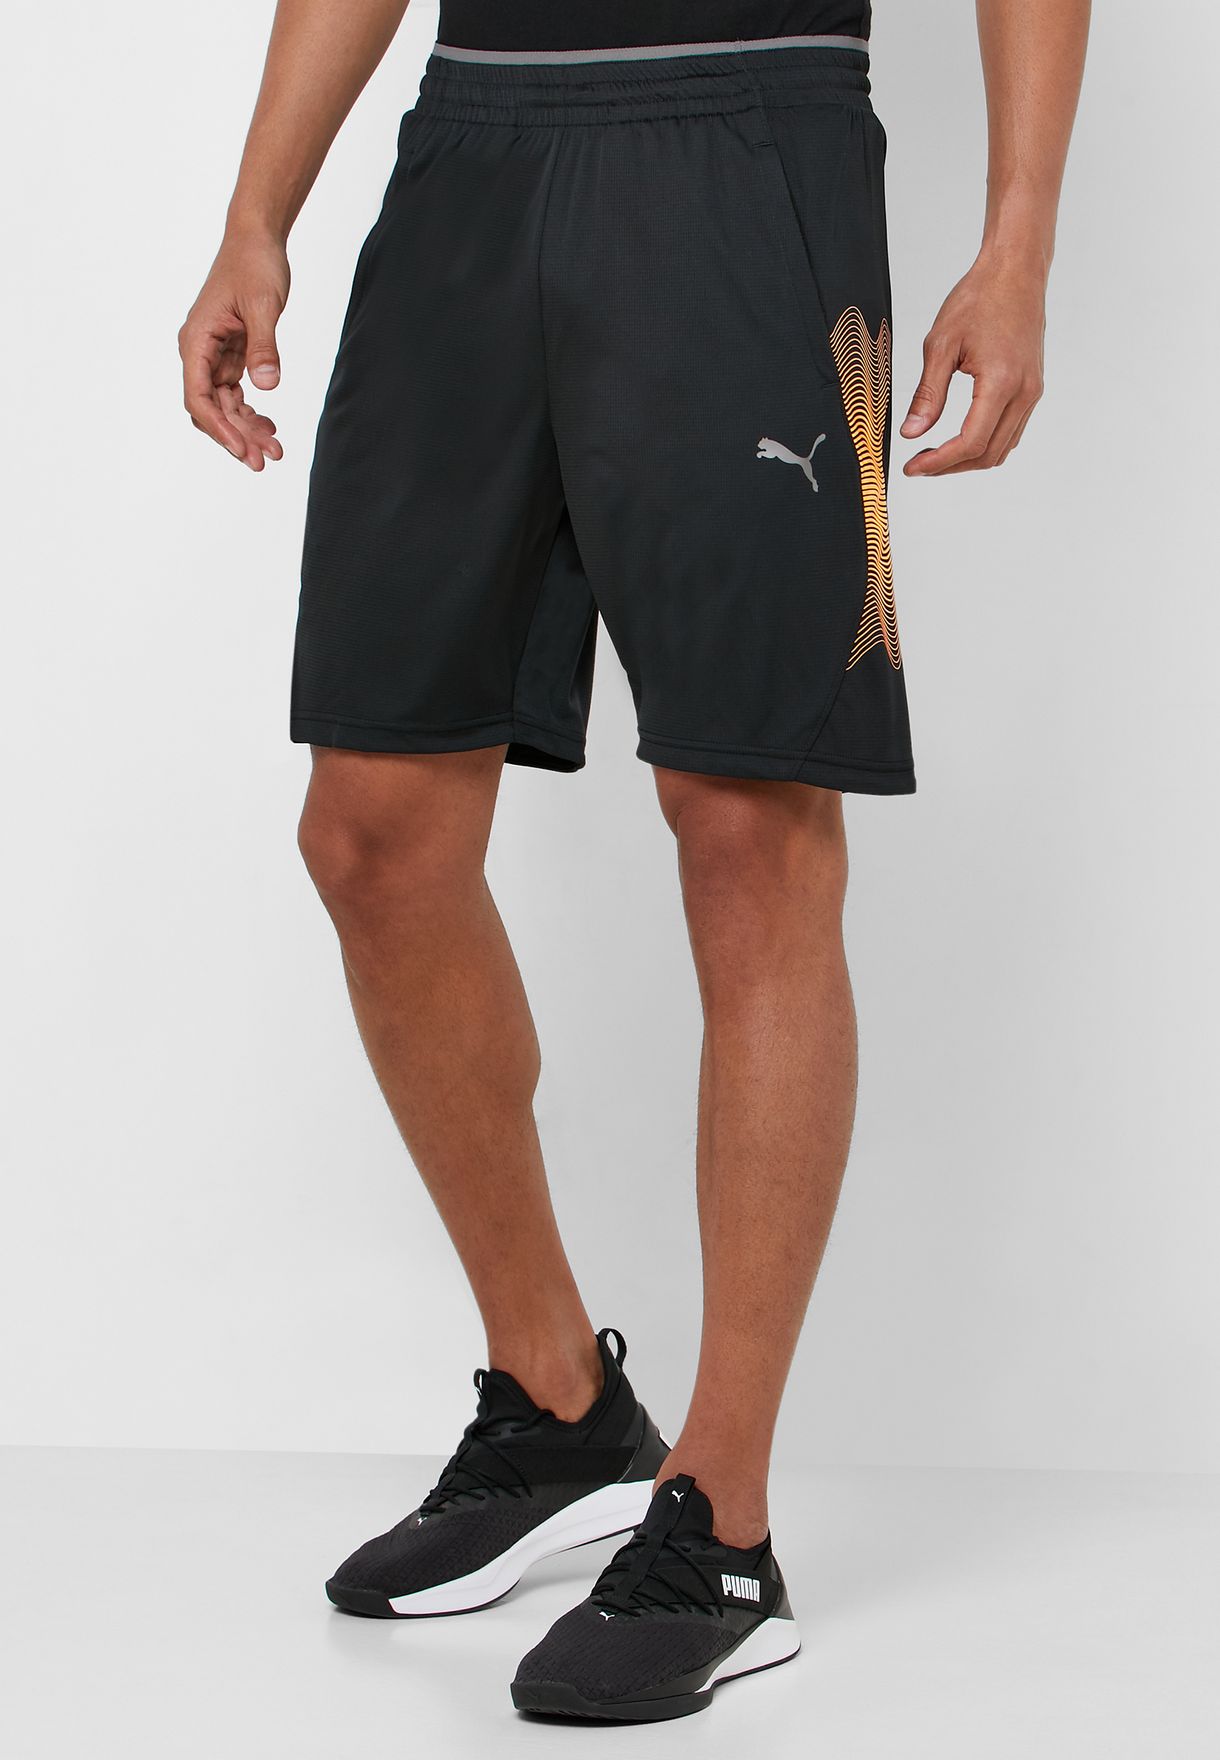 buy puma shorts